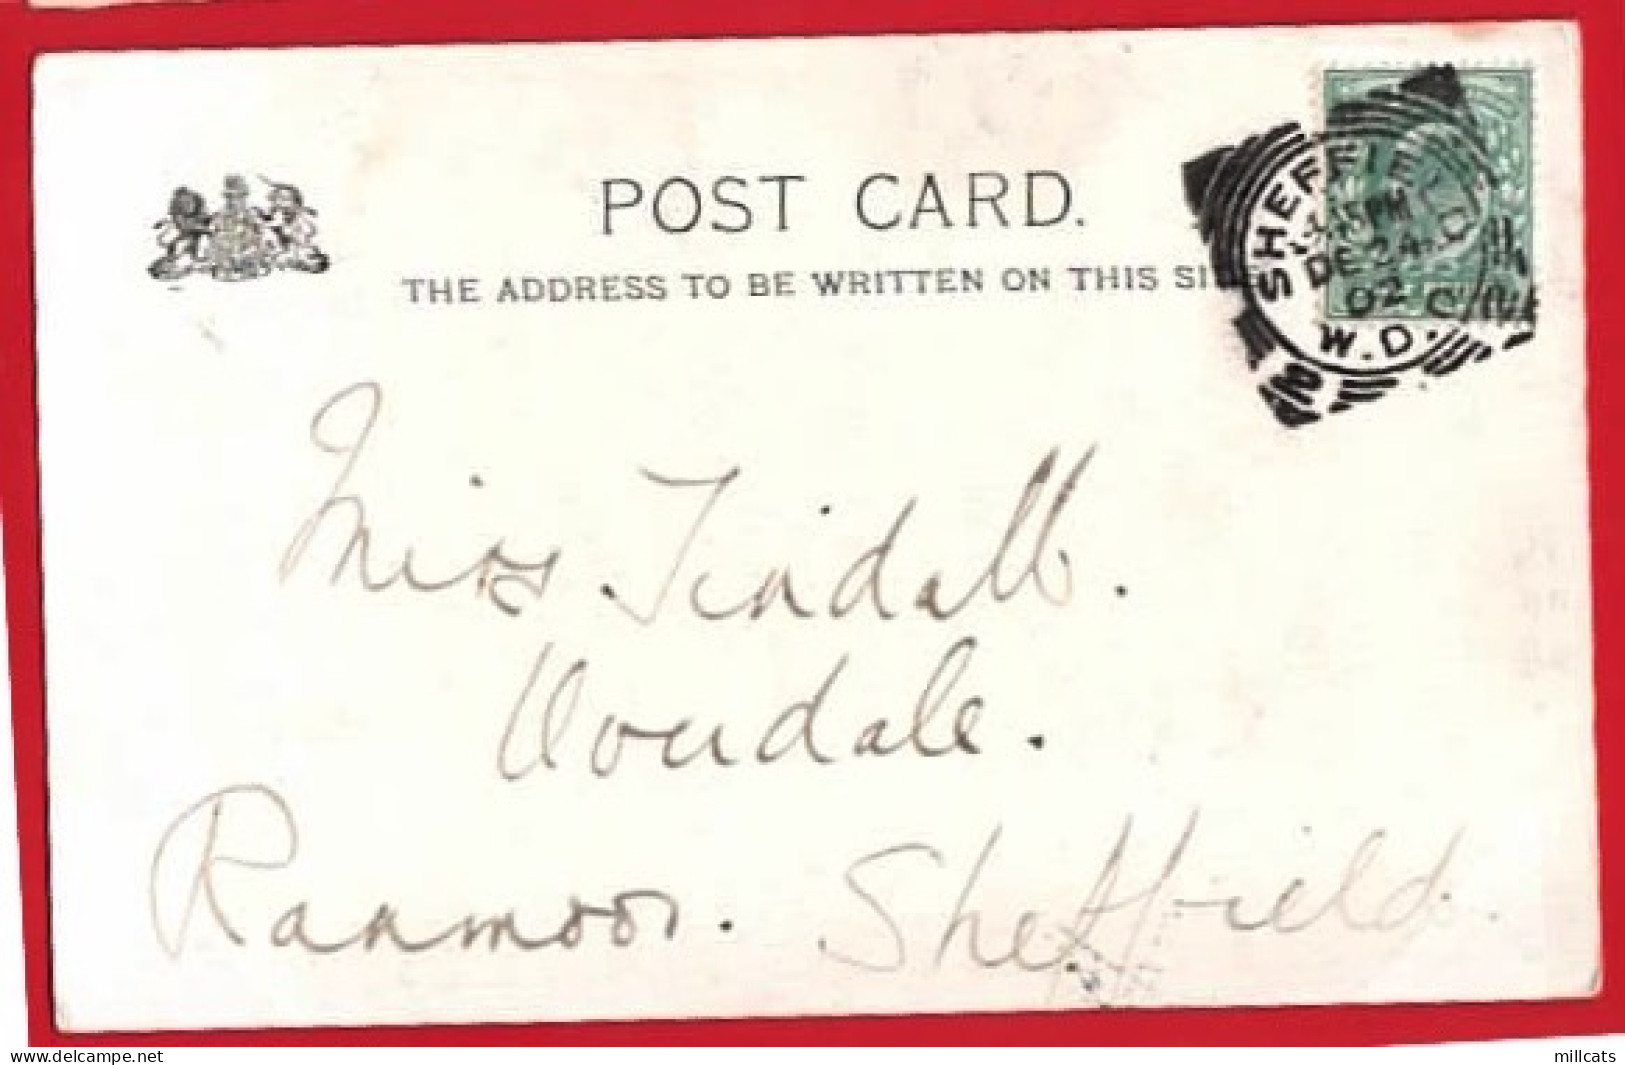 BRIDGE  REVOKED   RAPHAEL TUCK  ART SERIES SQUARE O POSTMARK 1902 - Playing Cards